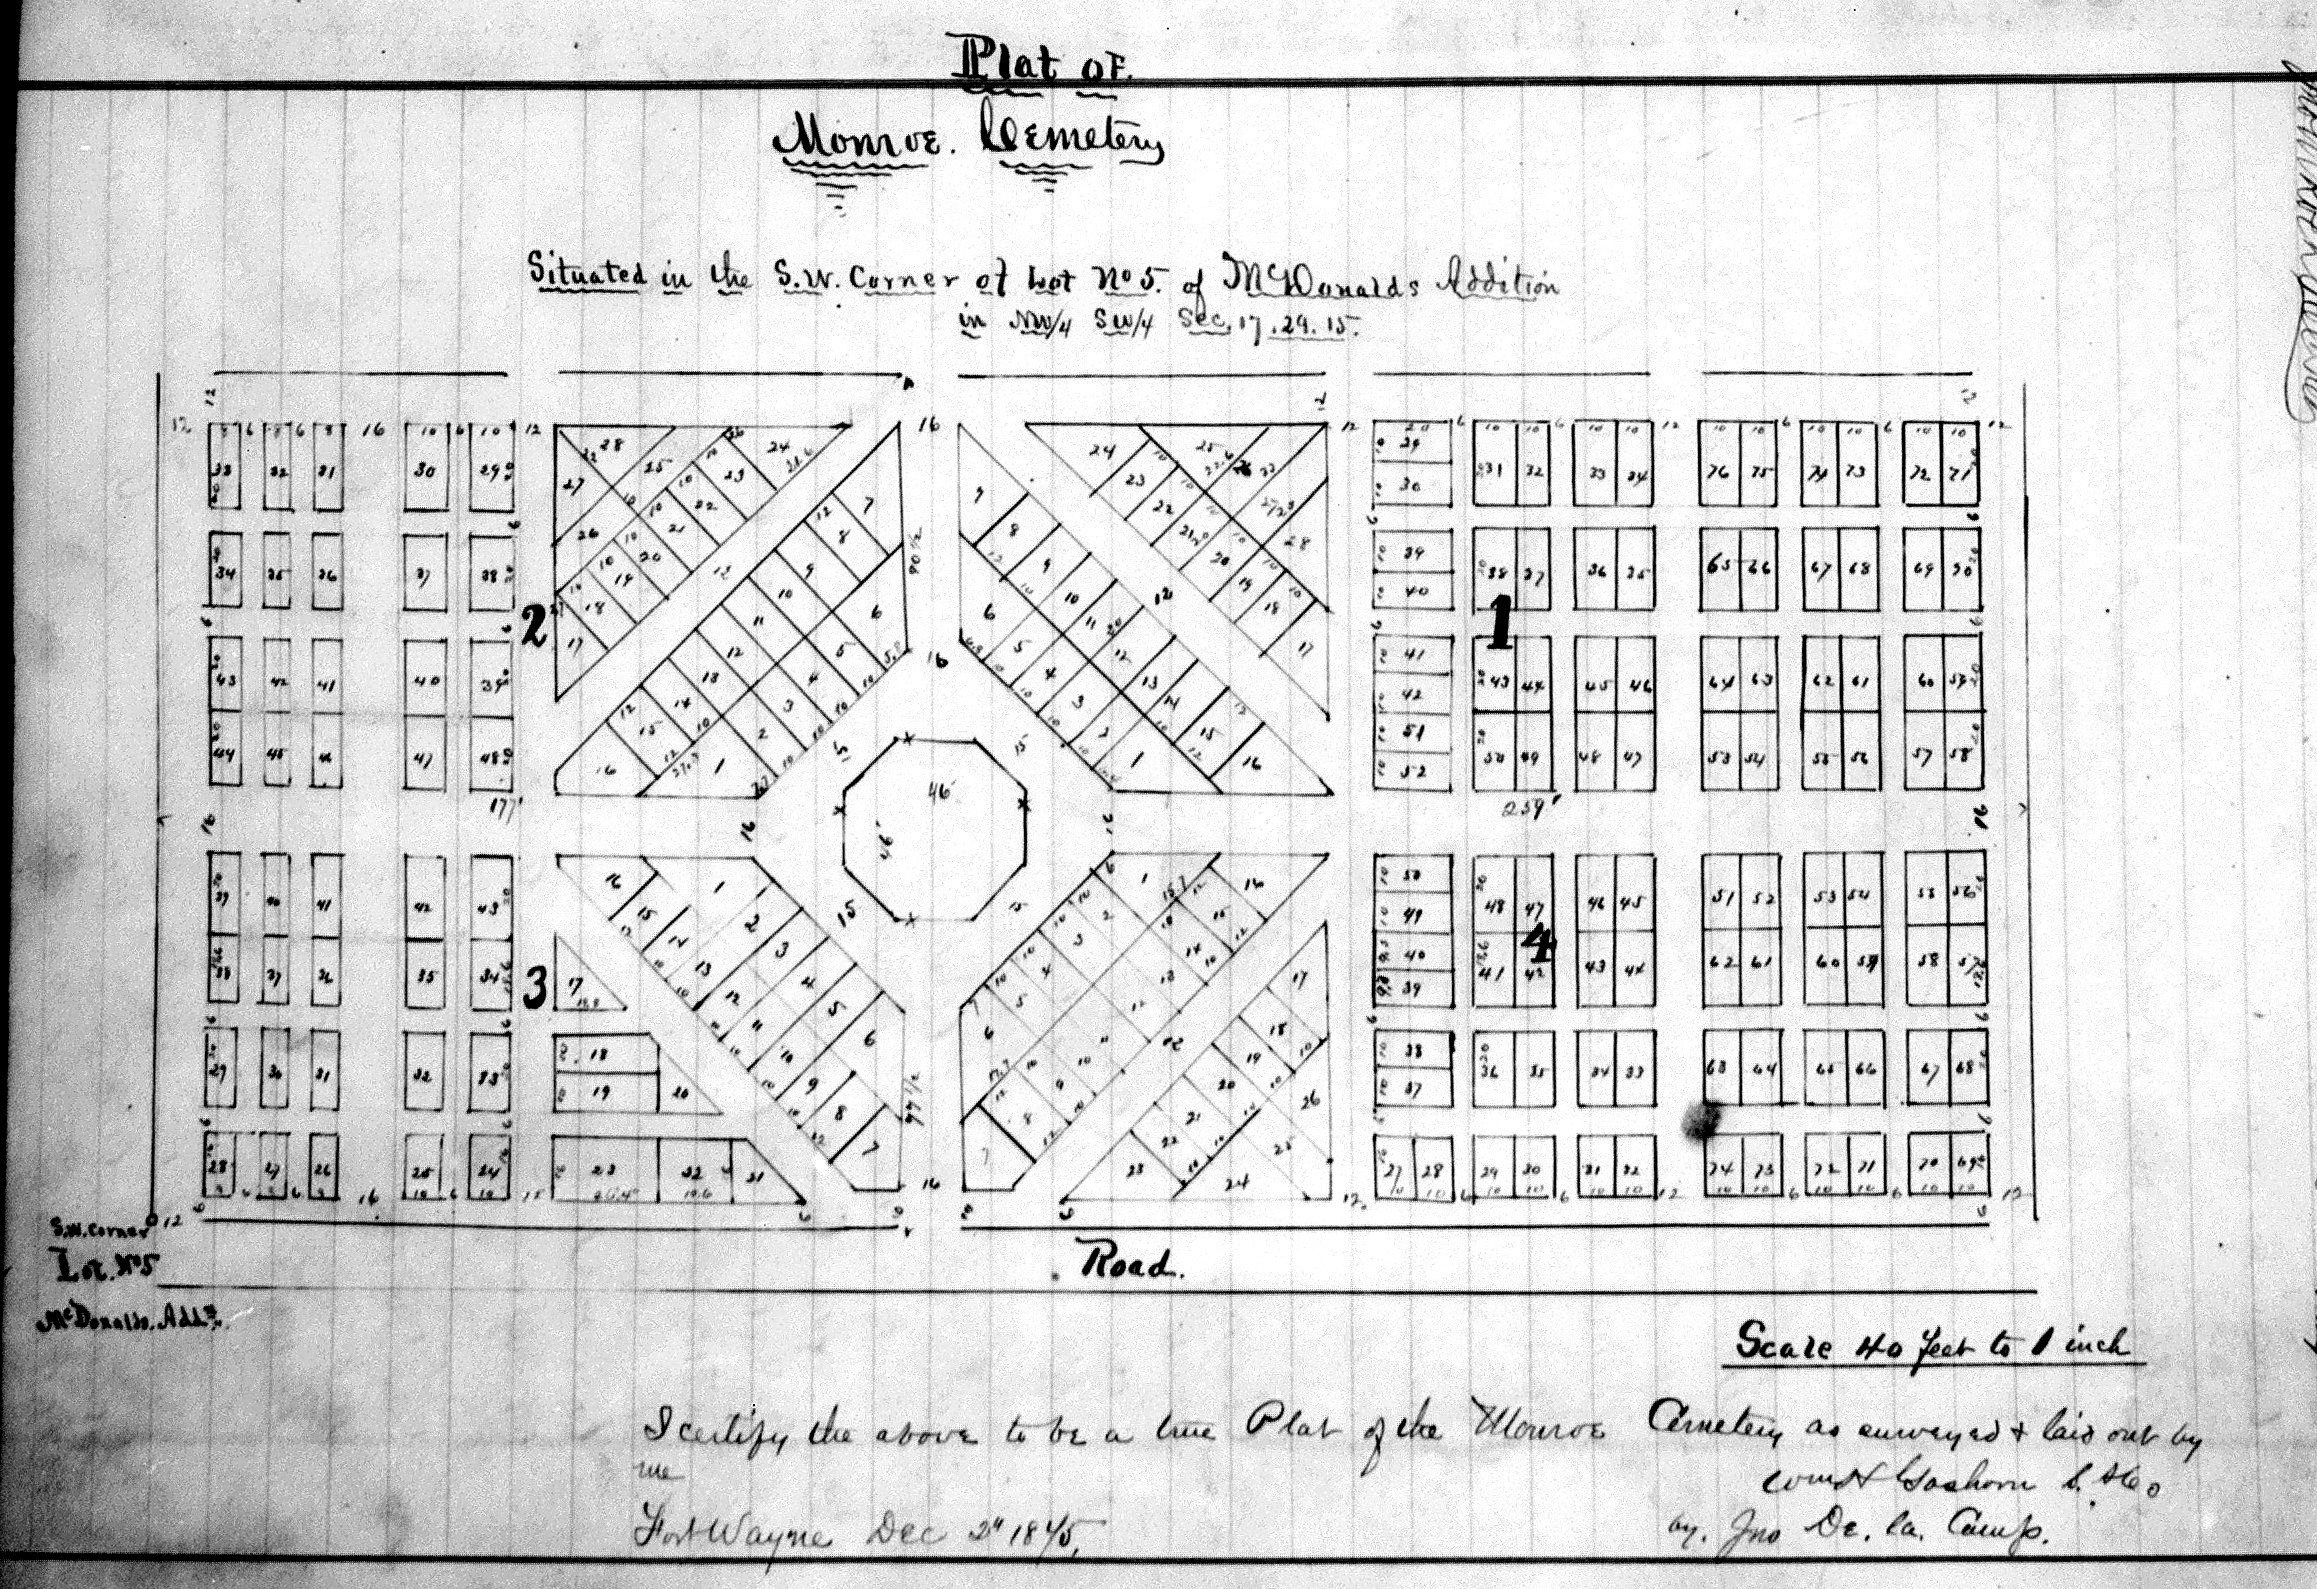 Monroe Cemetery plat, 1875